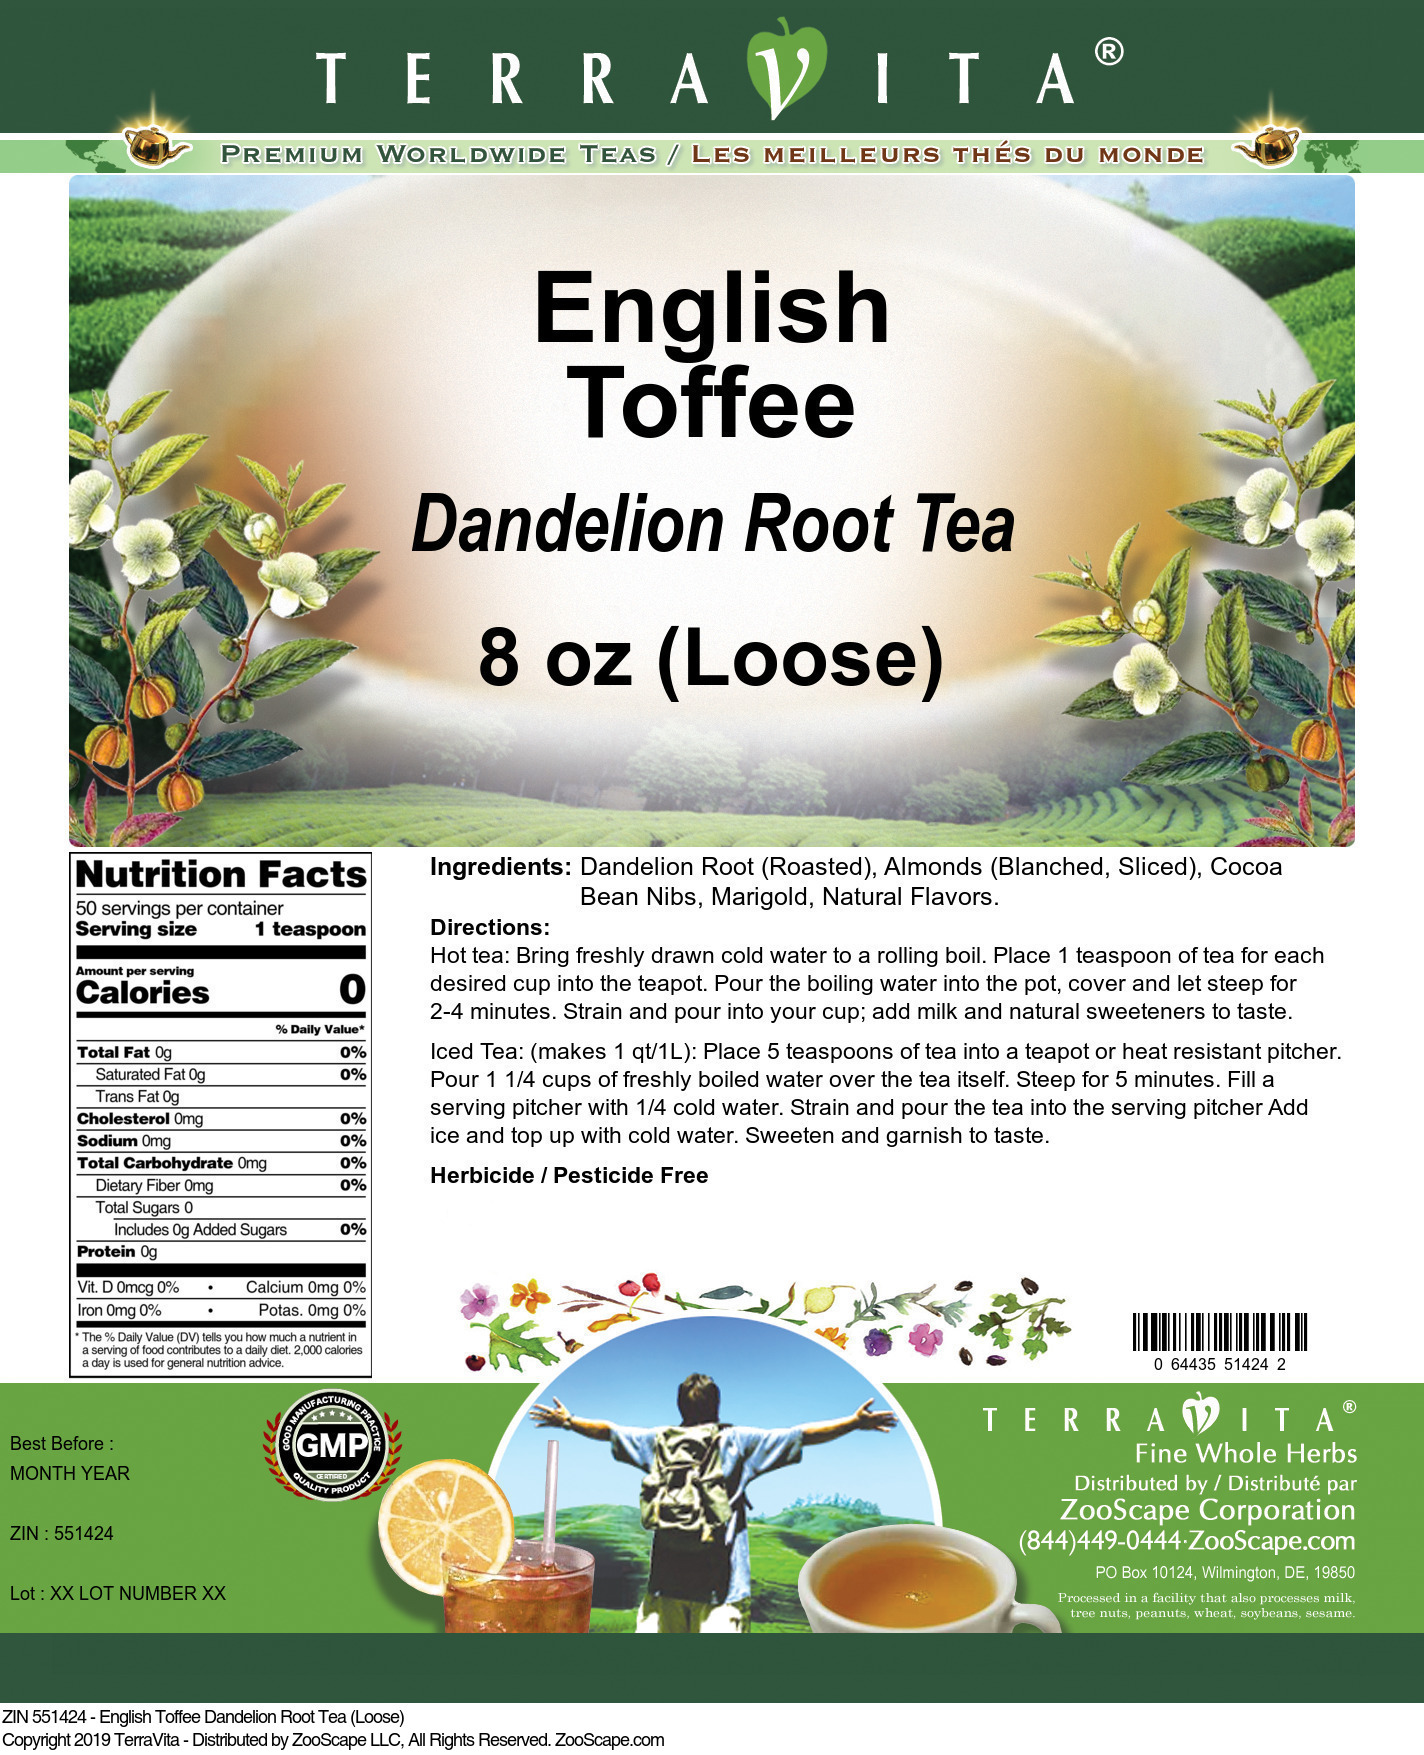 English Toffee Dandelion Root Tea (Loose) - Label